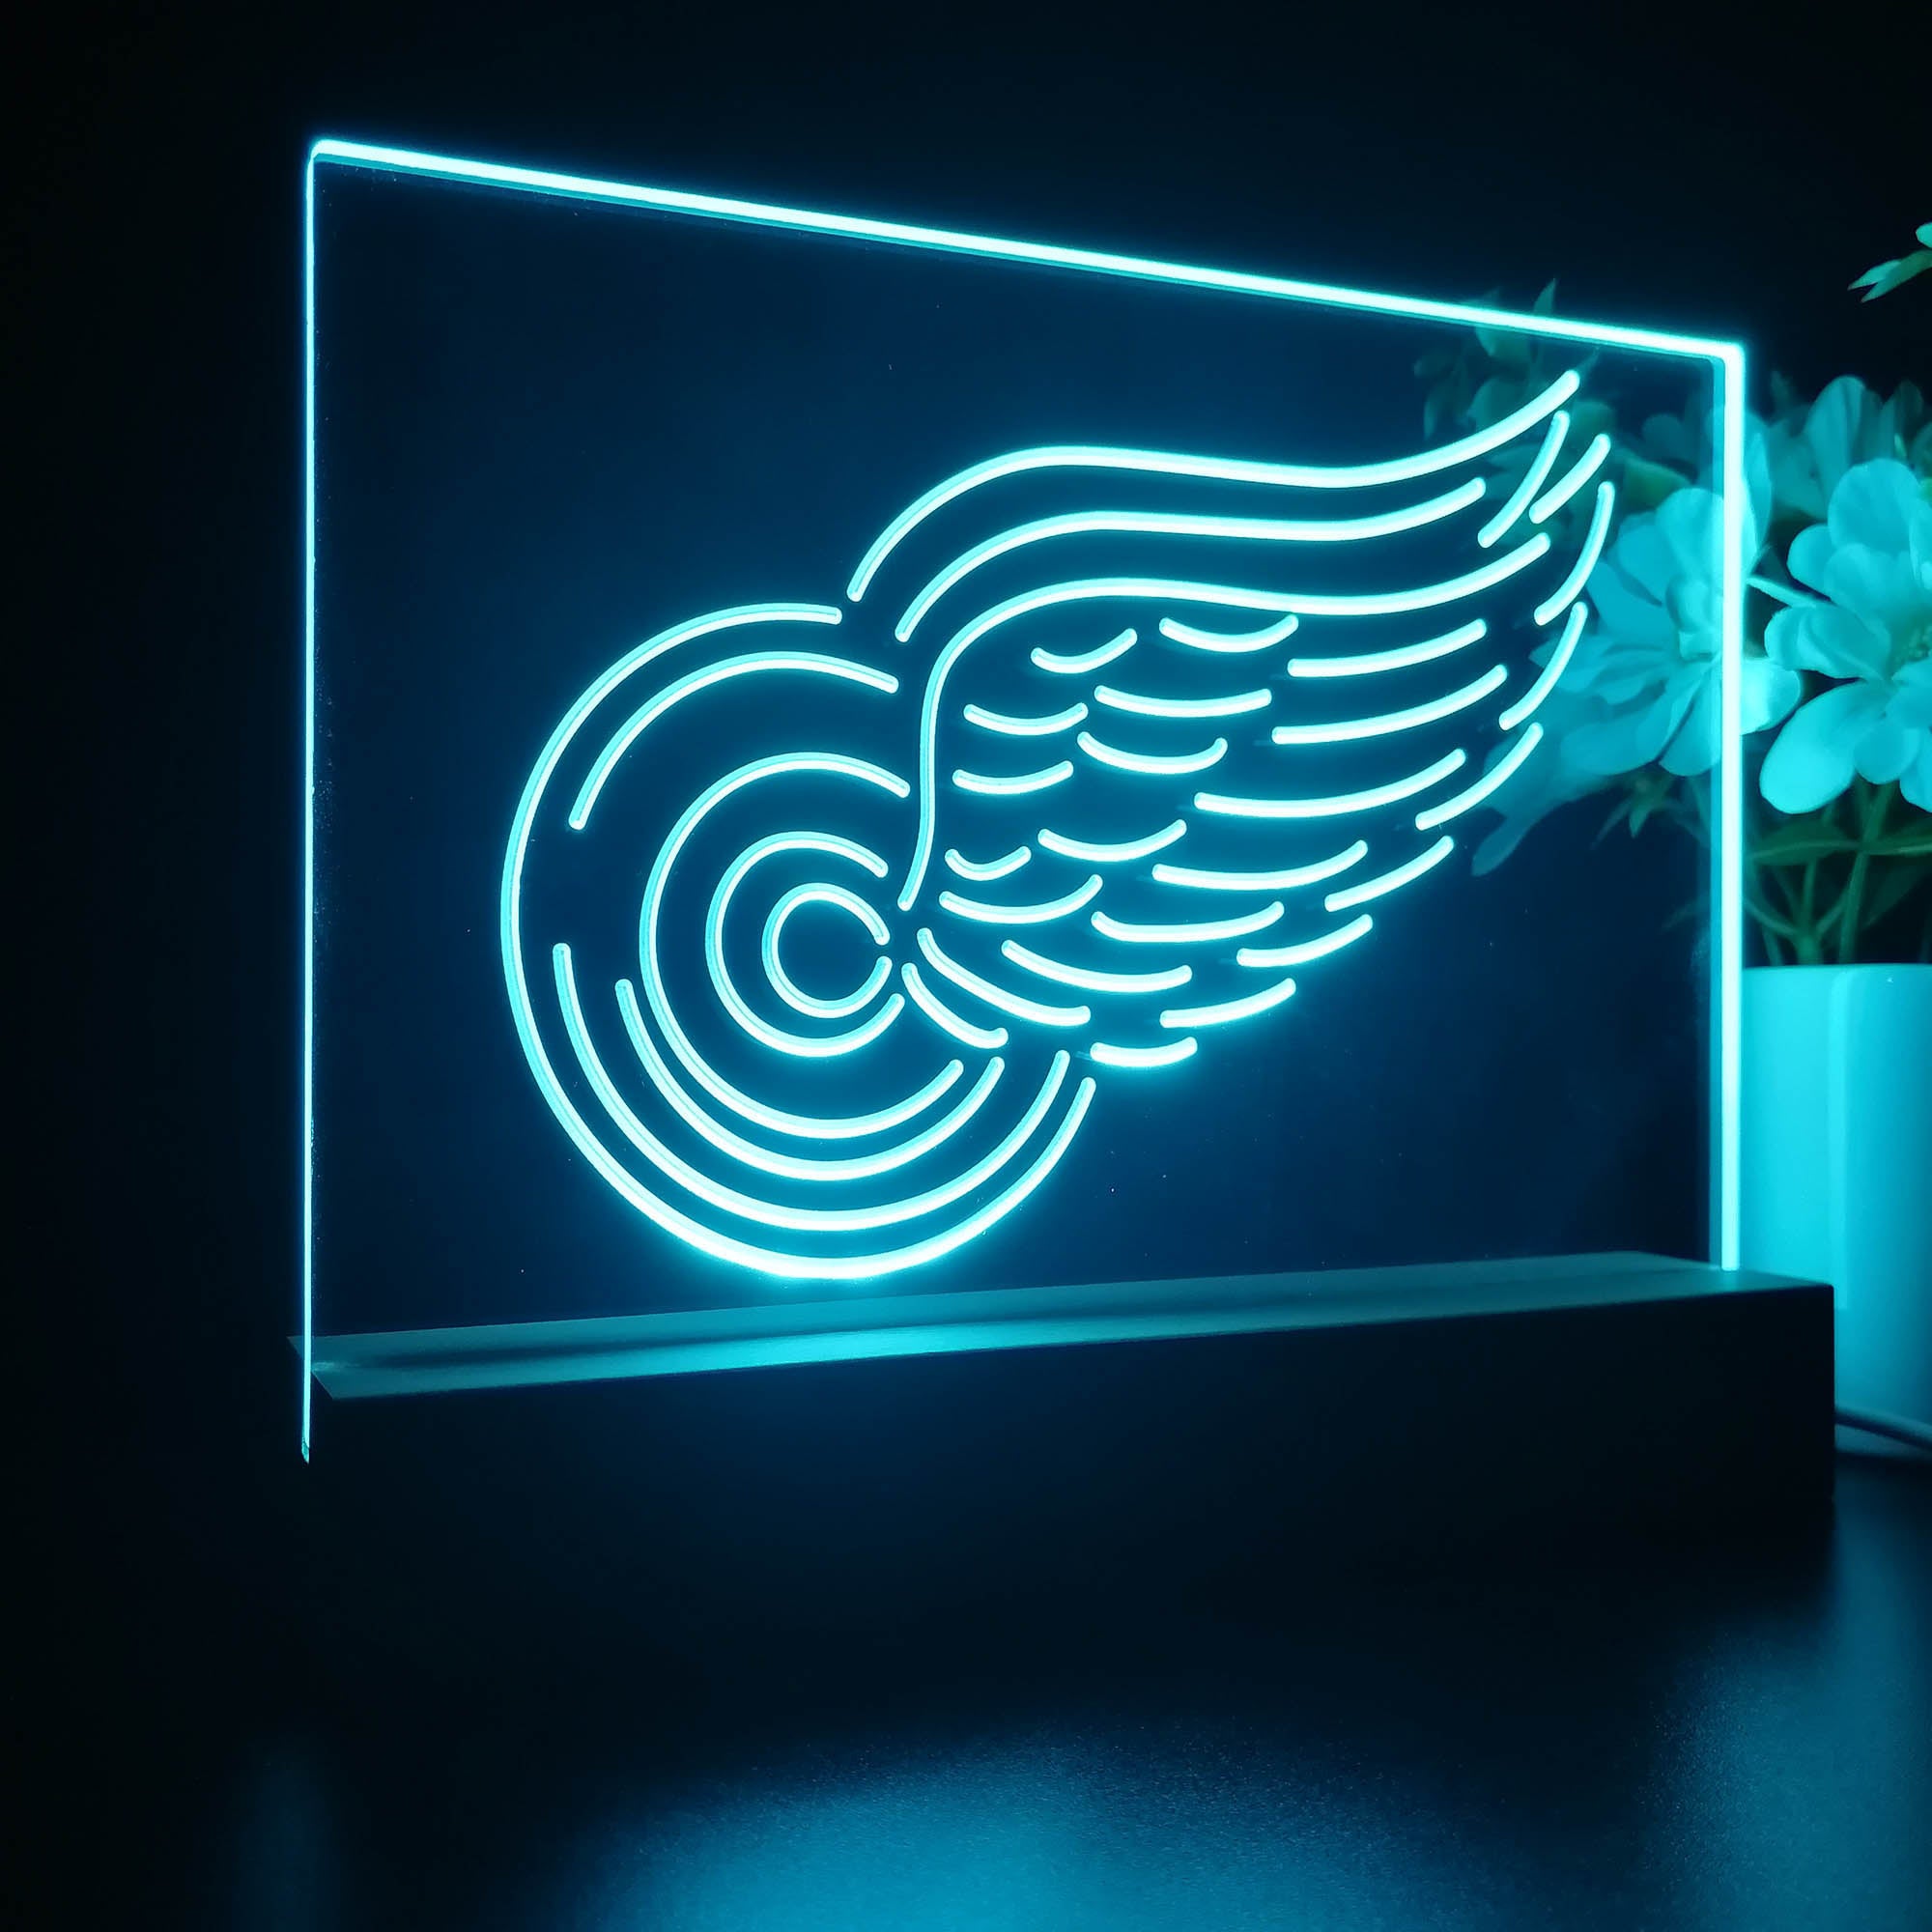 Detroit Sport Team Red Wings 3D LED Optical Illusion Sport Team Night Light